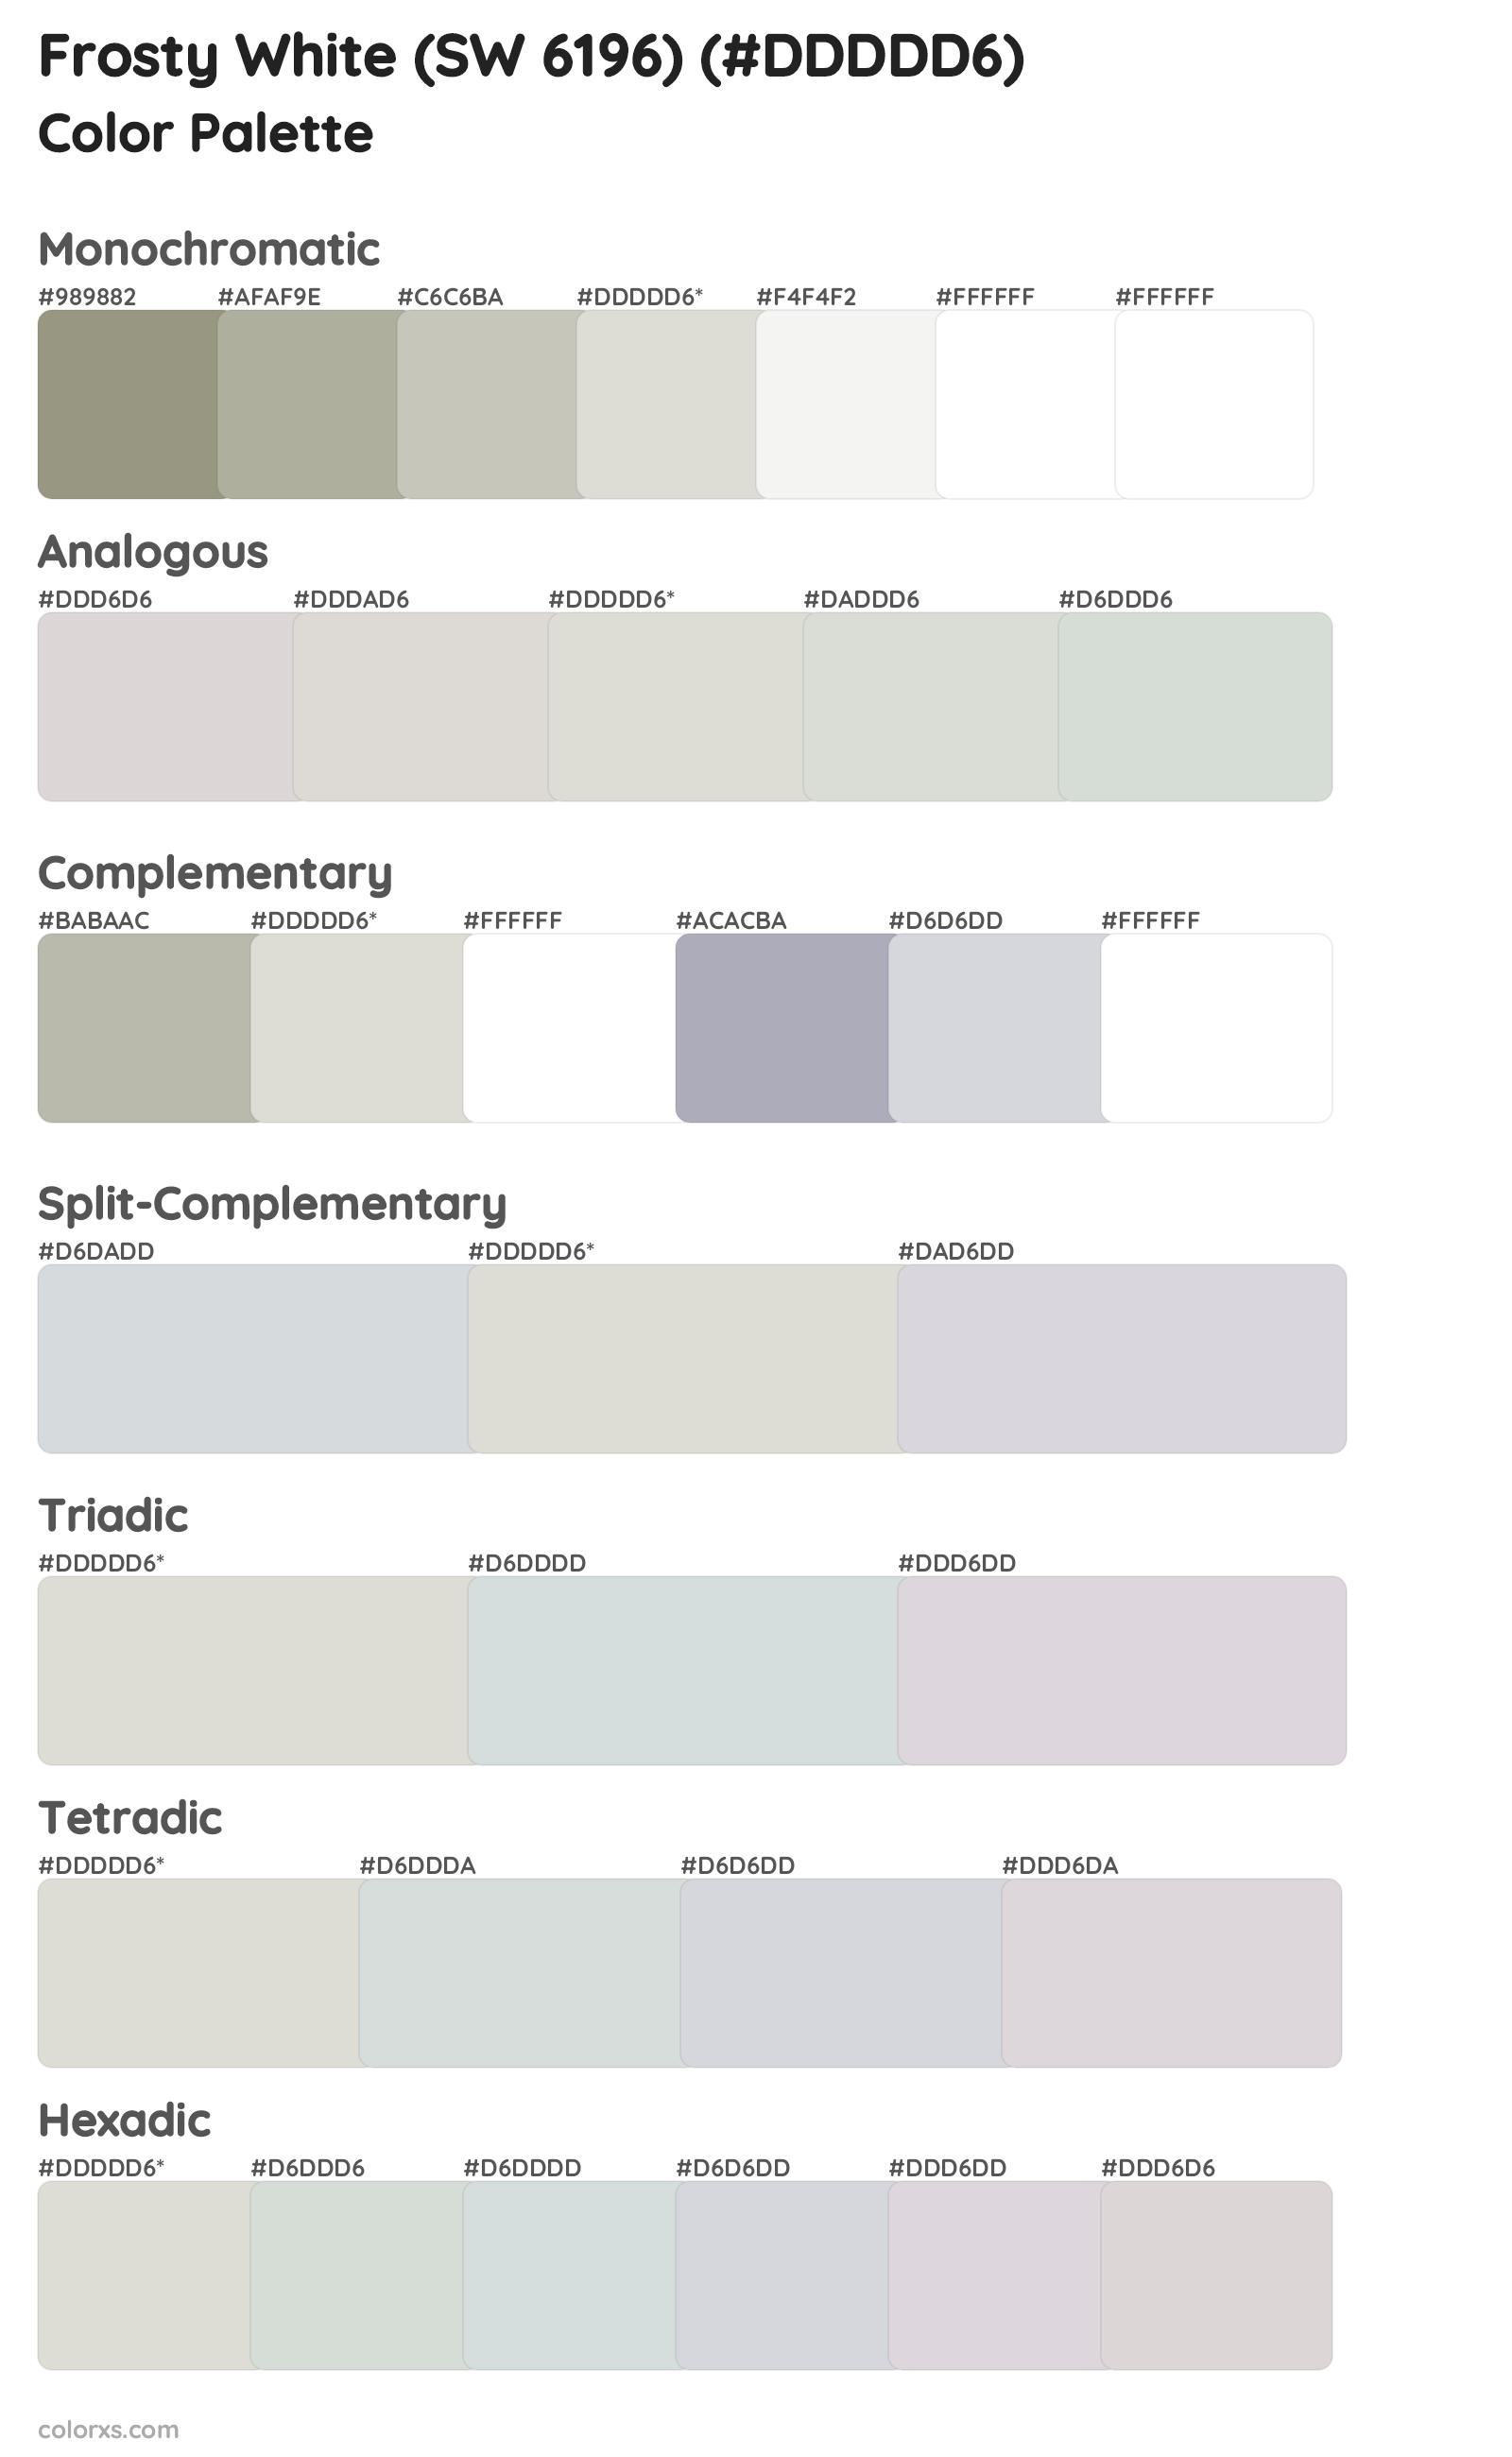 Frosty White (SW 6196) Color Scheme Palettes